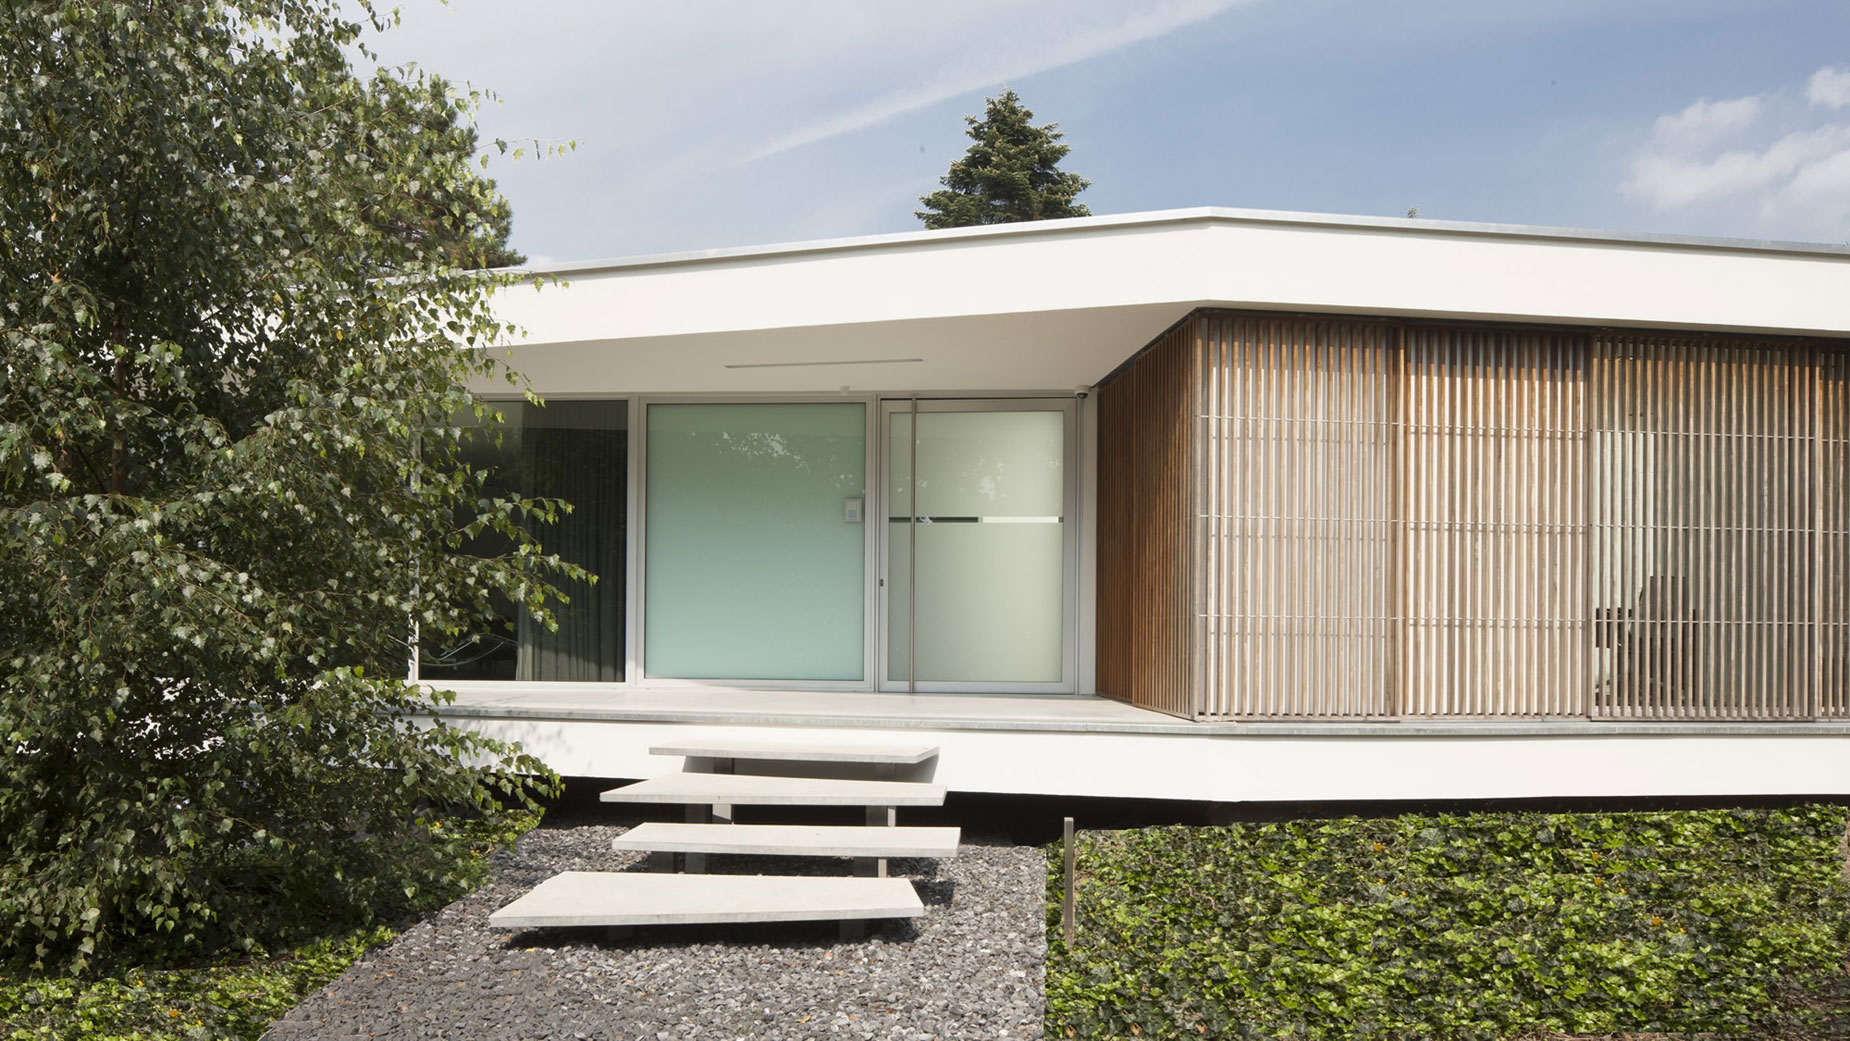 Boxed Villa Spee Haelen with Panoramic Windows by Lab32 architecten-09